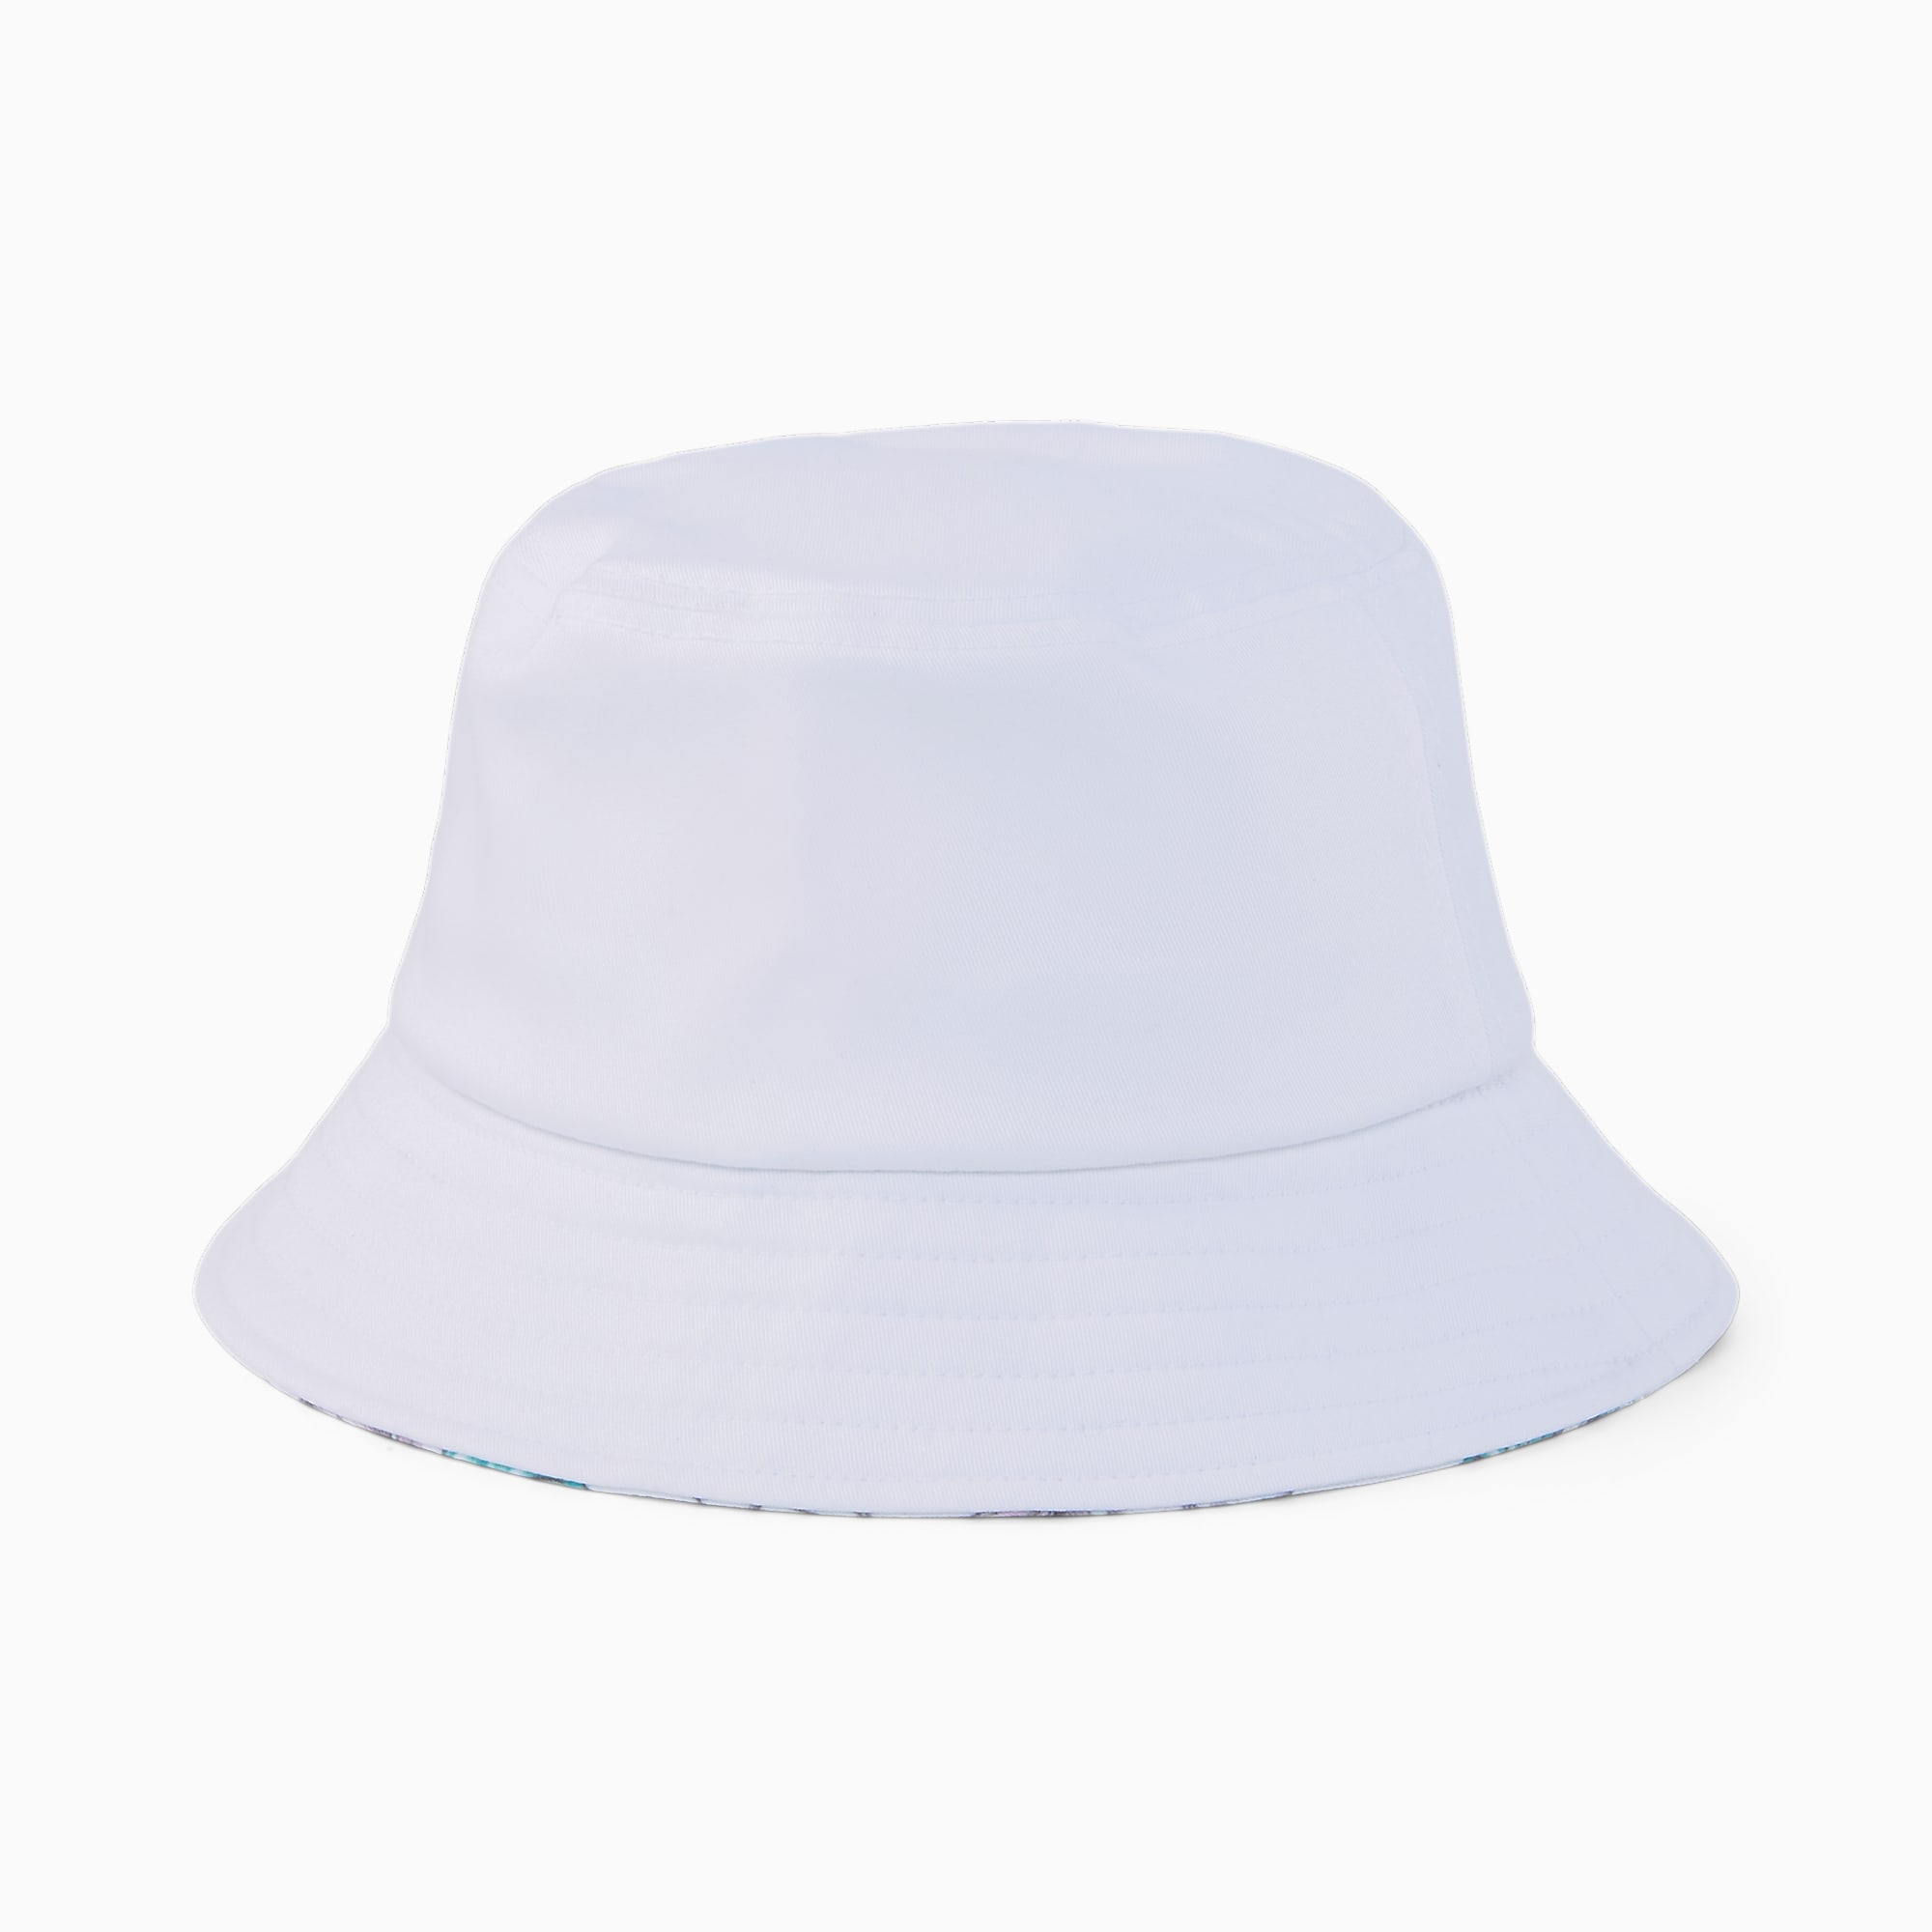 PUMA X Palm Tree Crew Golf Bucket Hat Men, Bright White